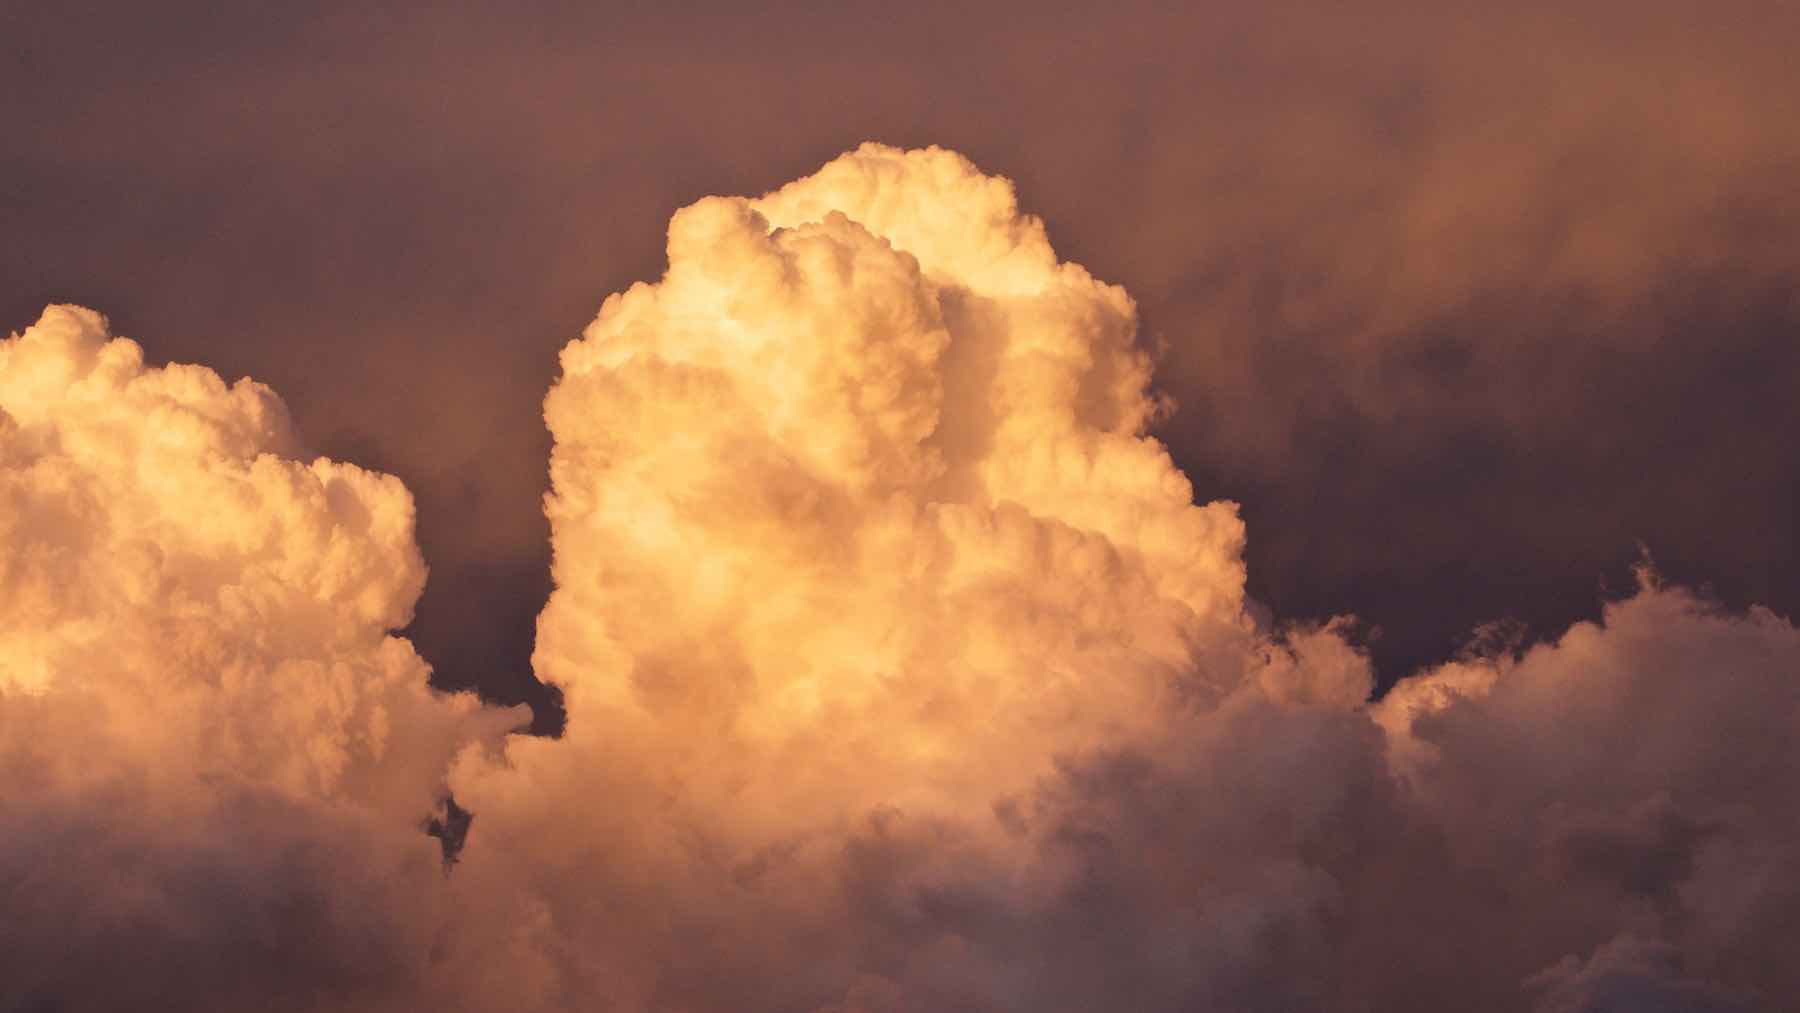 Cumulonimbus cloud during sunset